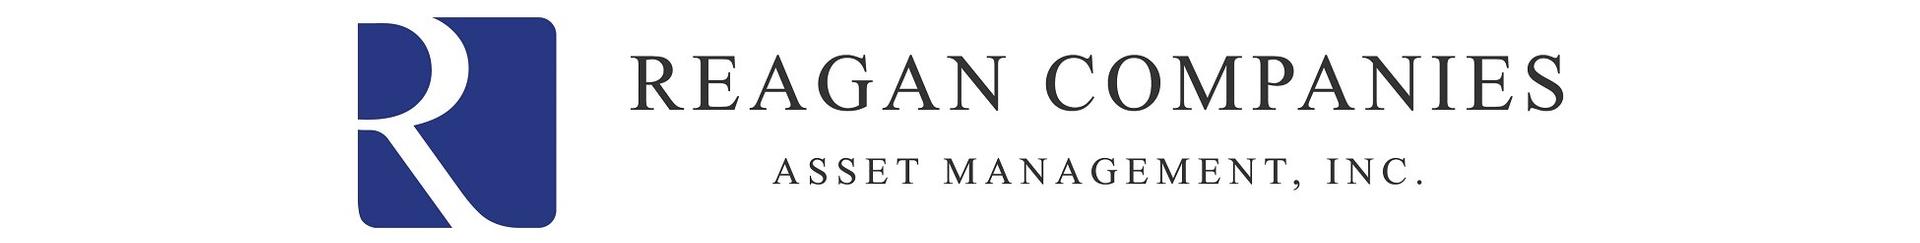 Reagan Companies Asset Management Inc.